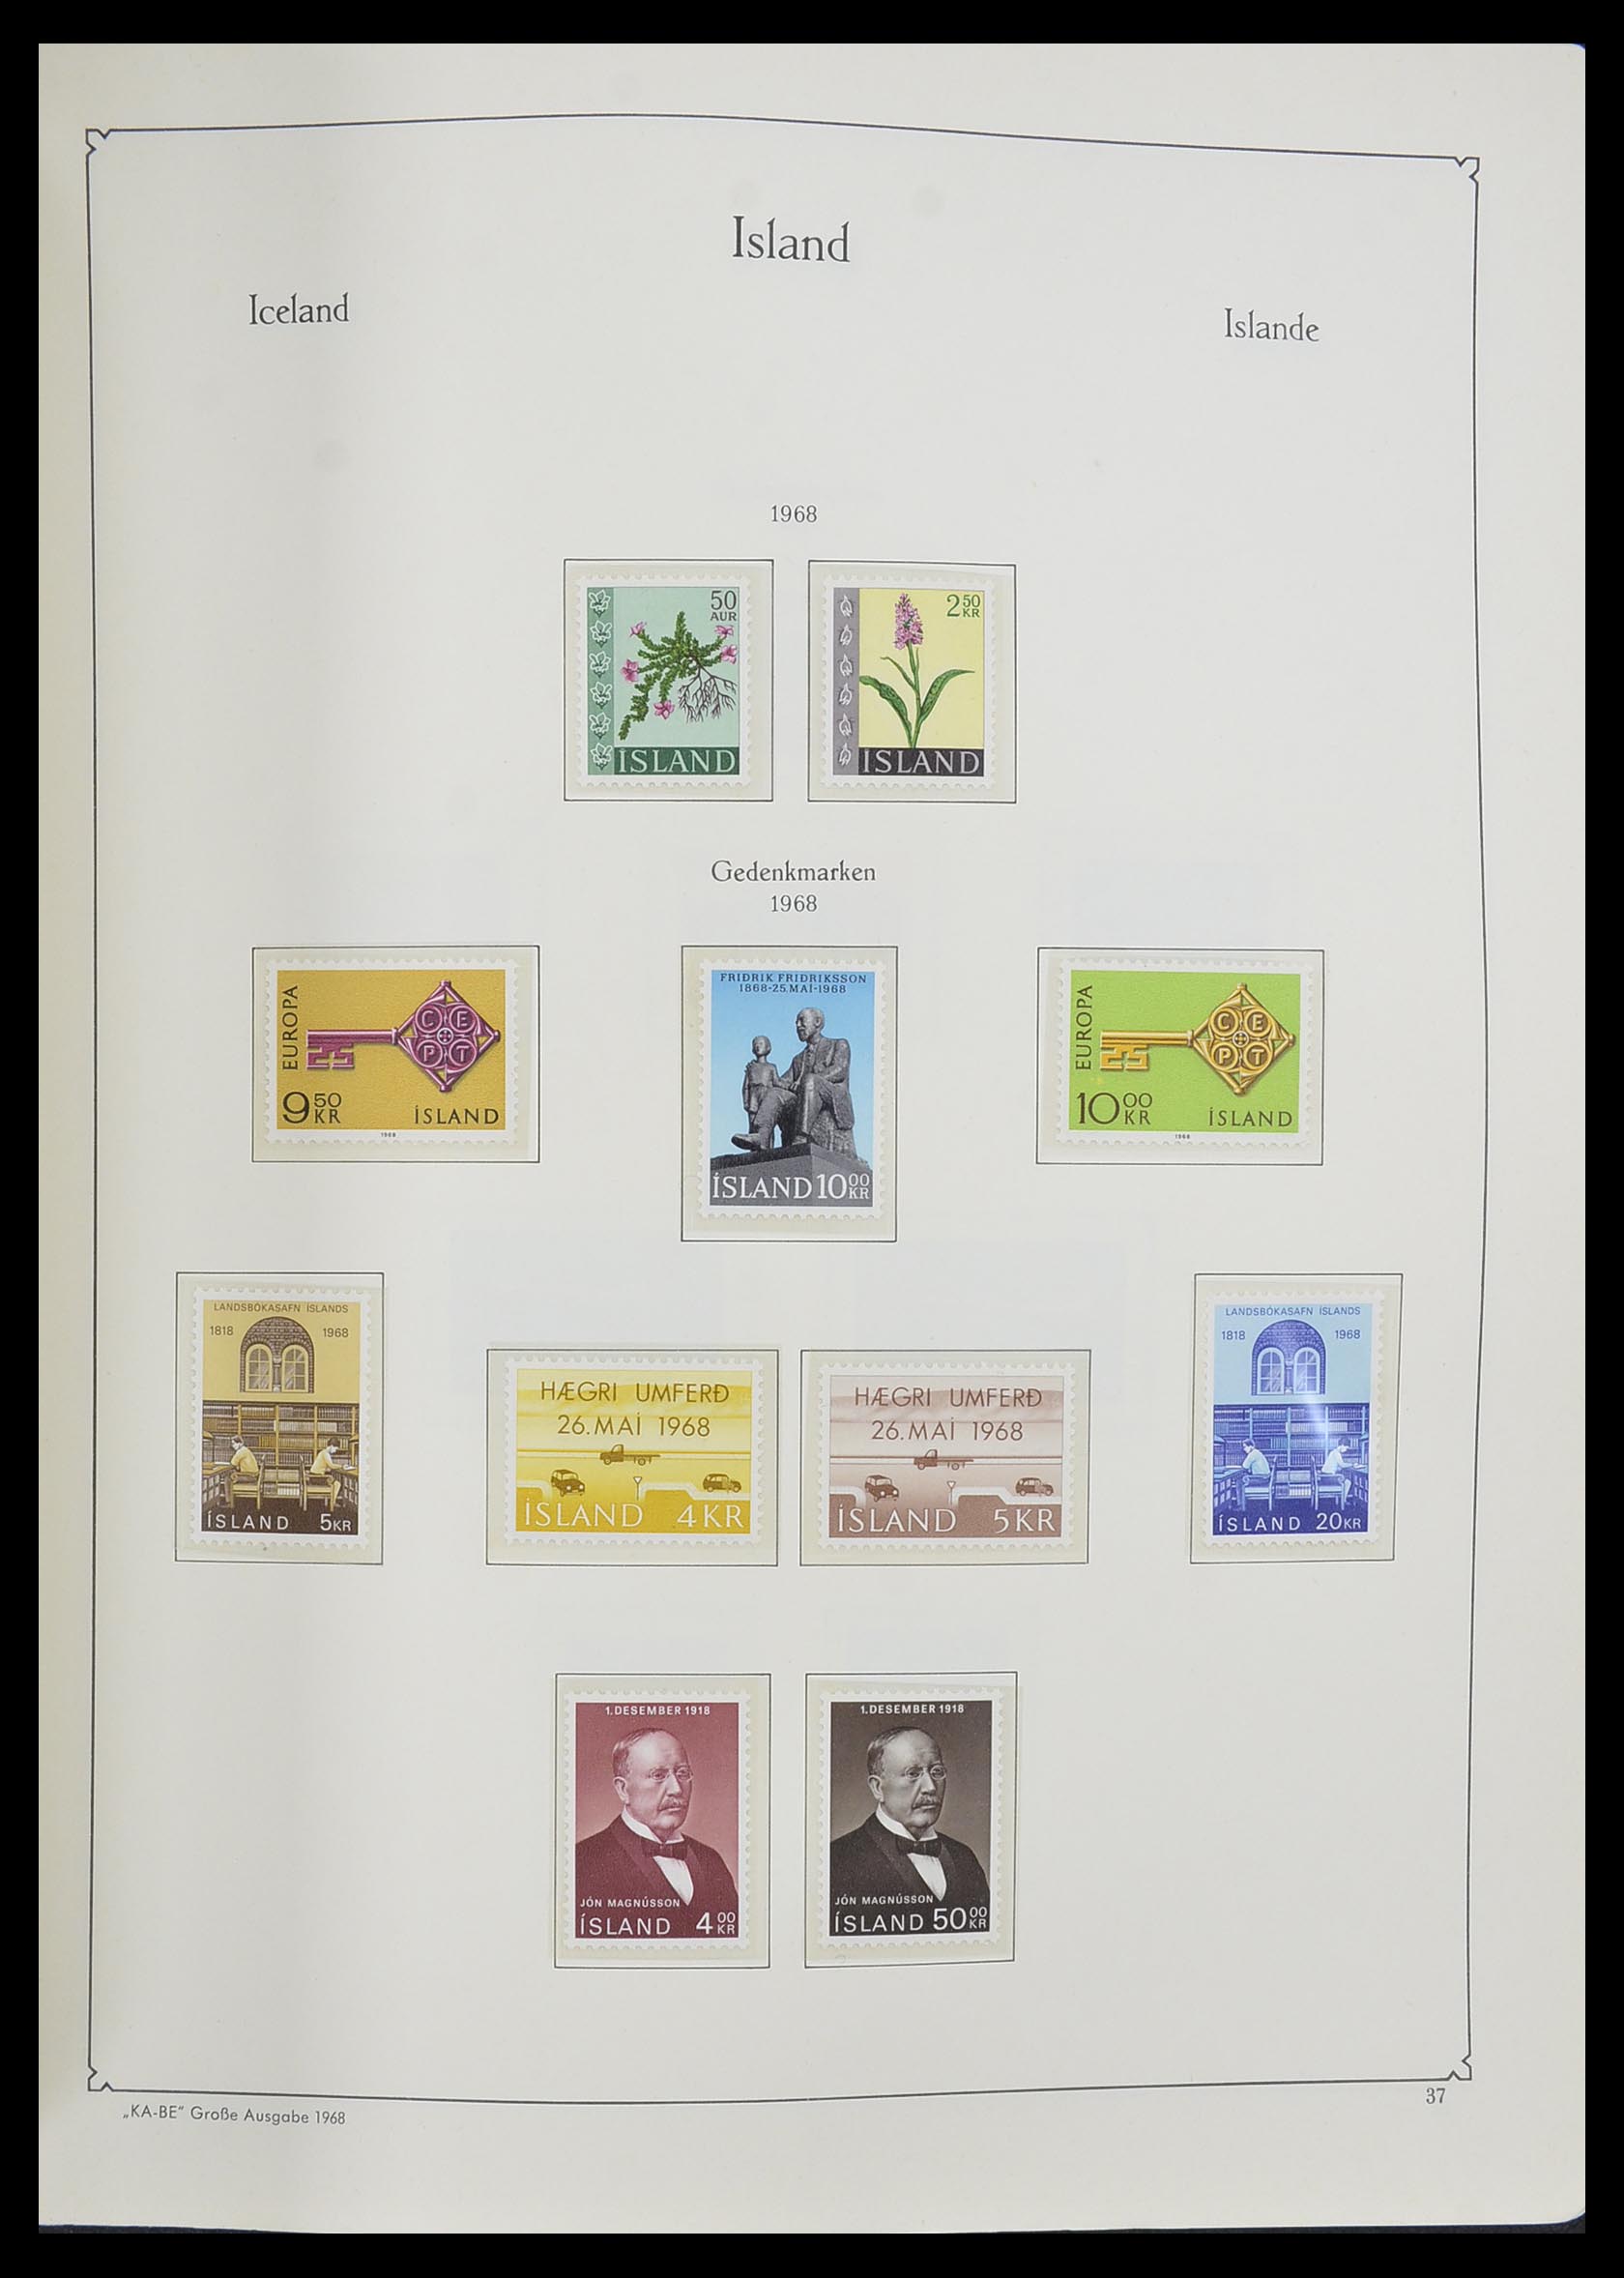 33379 093 - Stamp collection 33379 Scandinavia 1856-1972.